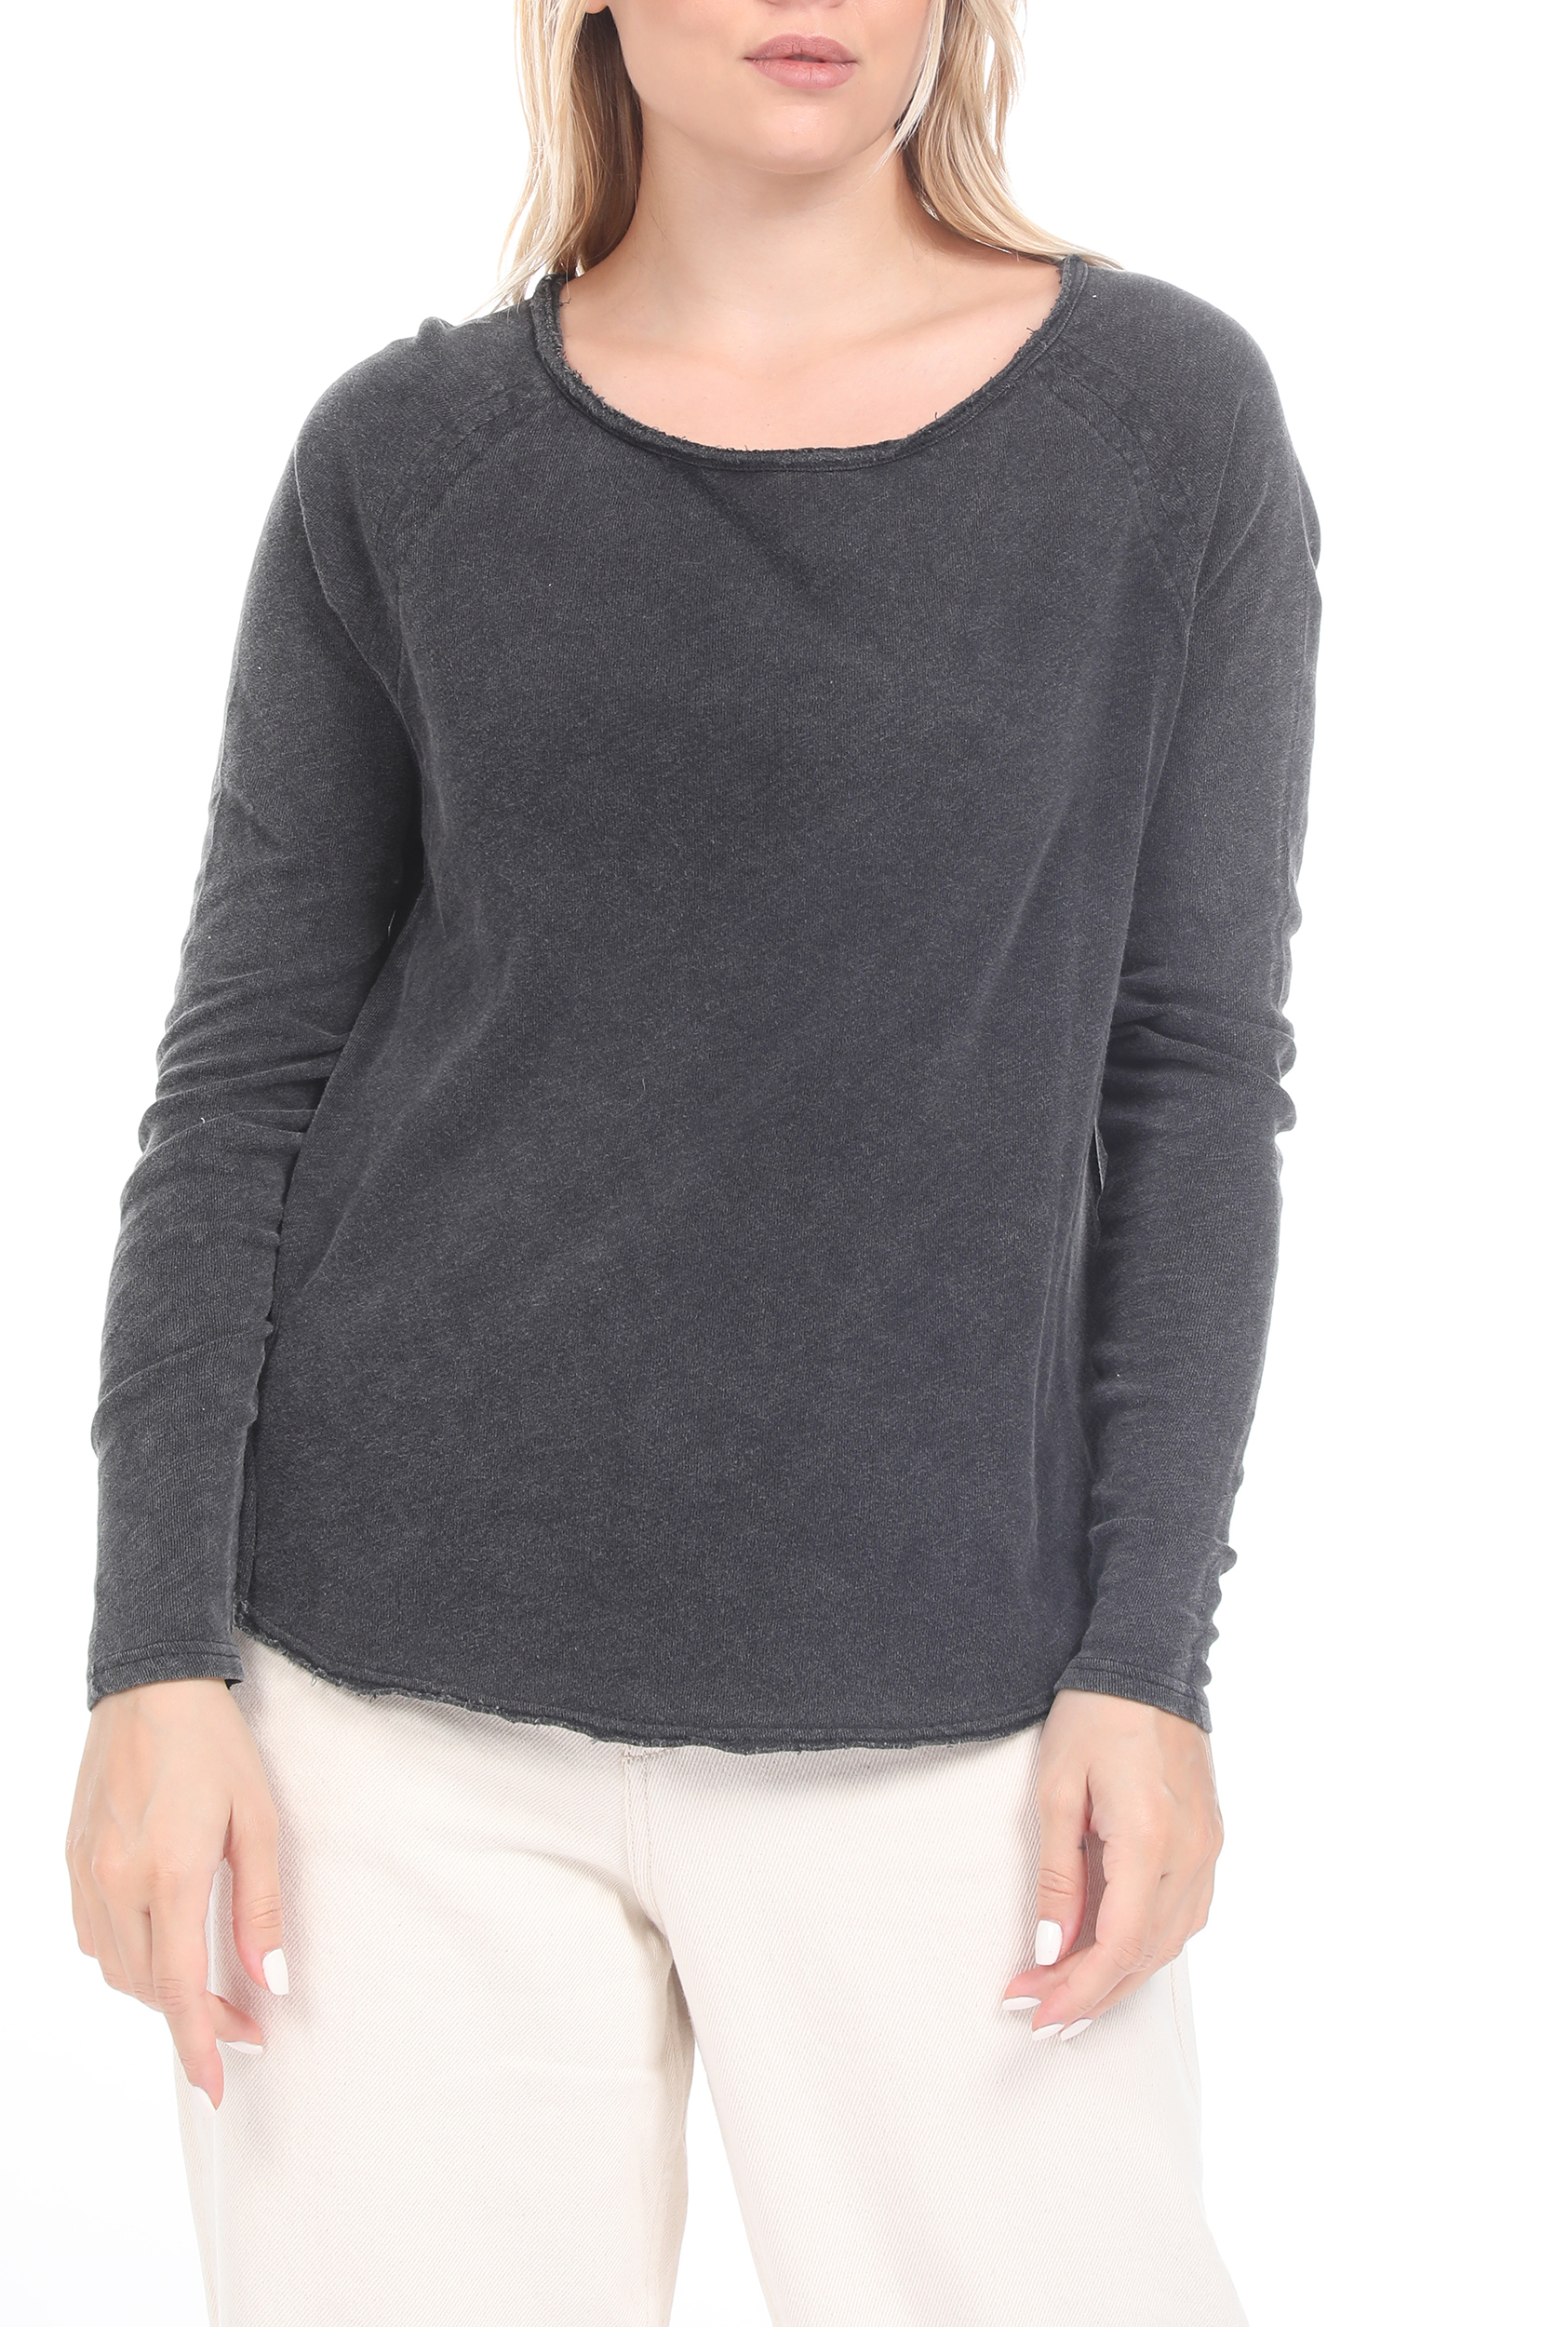 AMERICAN VINTAGE – Γυναικεία μακρυμάνικη μπλούζα AMERICAN VINTAGE ανθρακί 1796058.0-7171